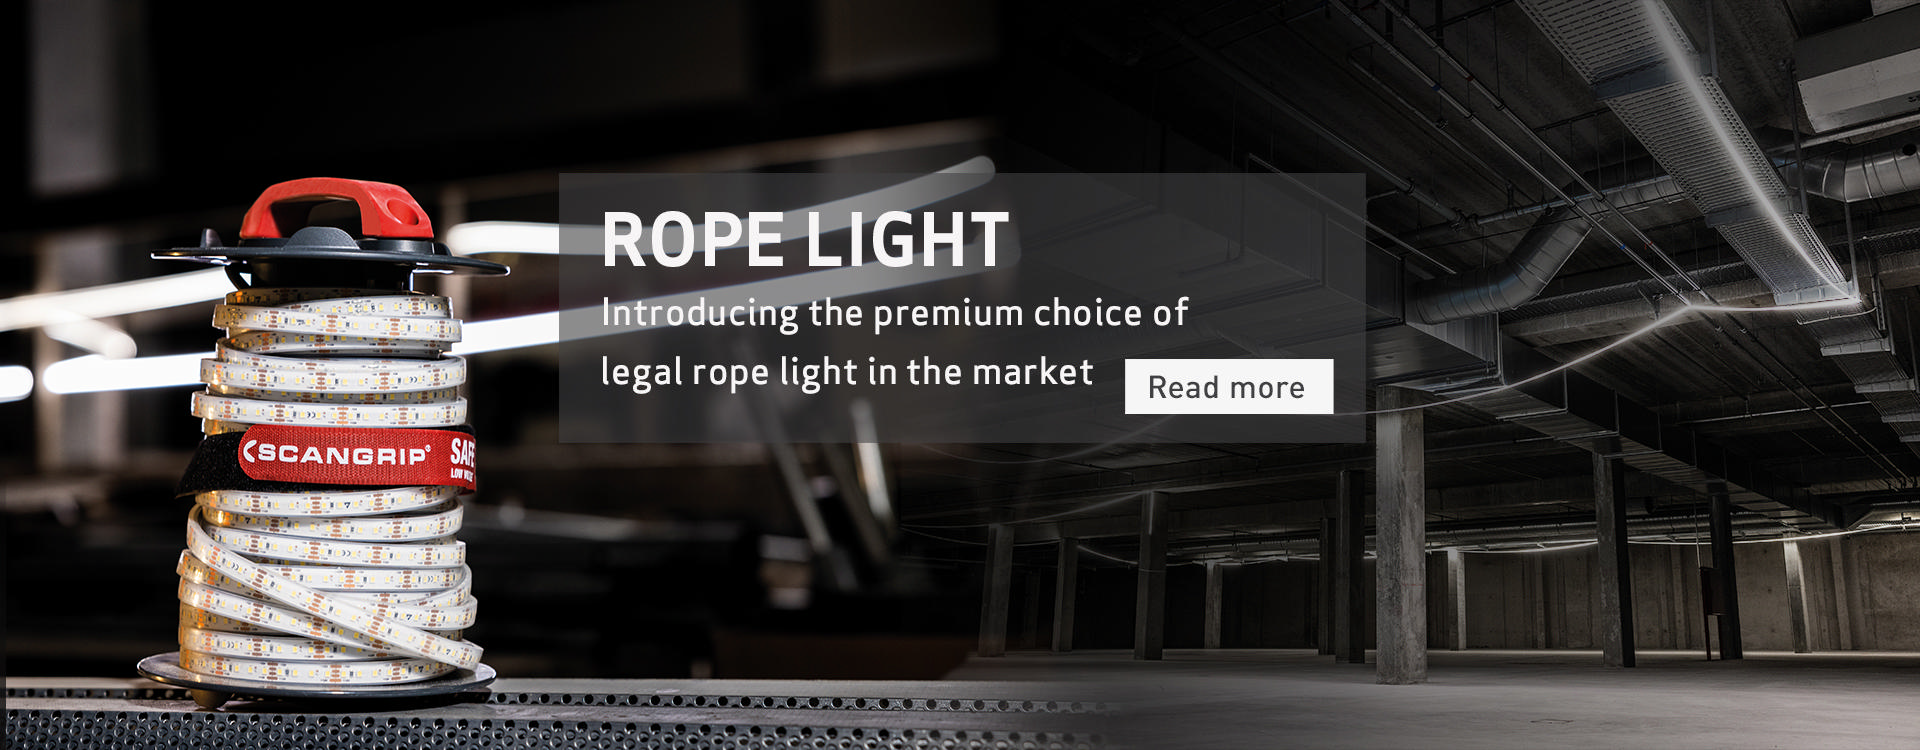 Rope light